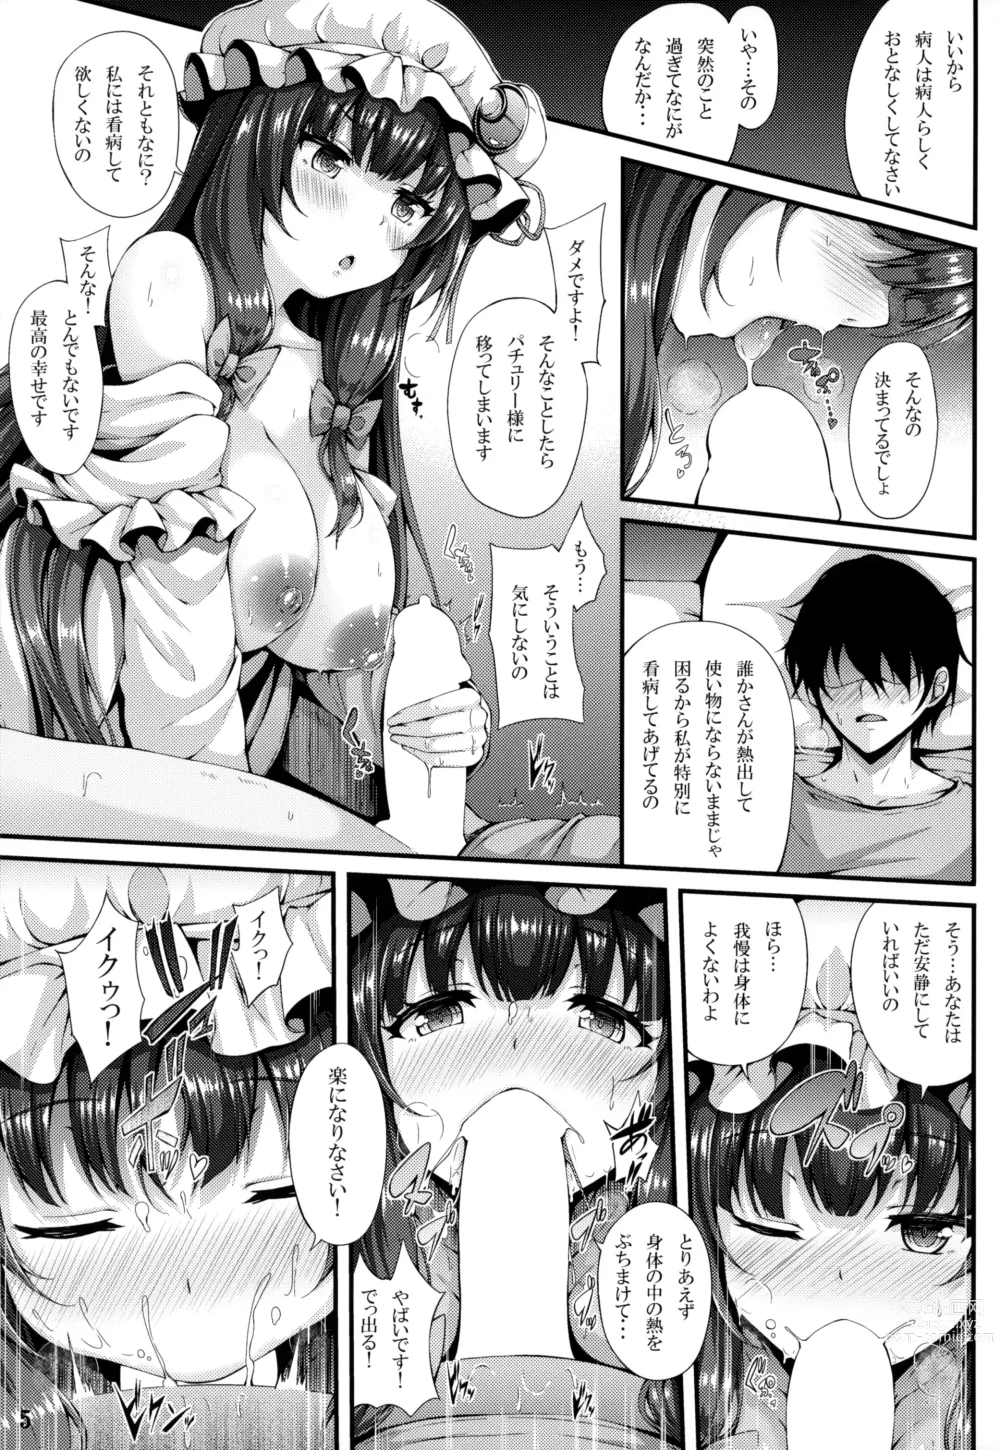 Page 4 of doujinshi Misshitsu Kanbyou